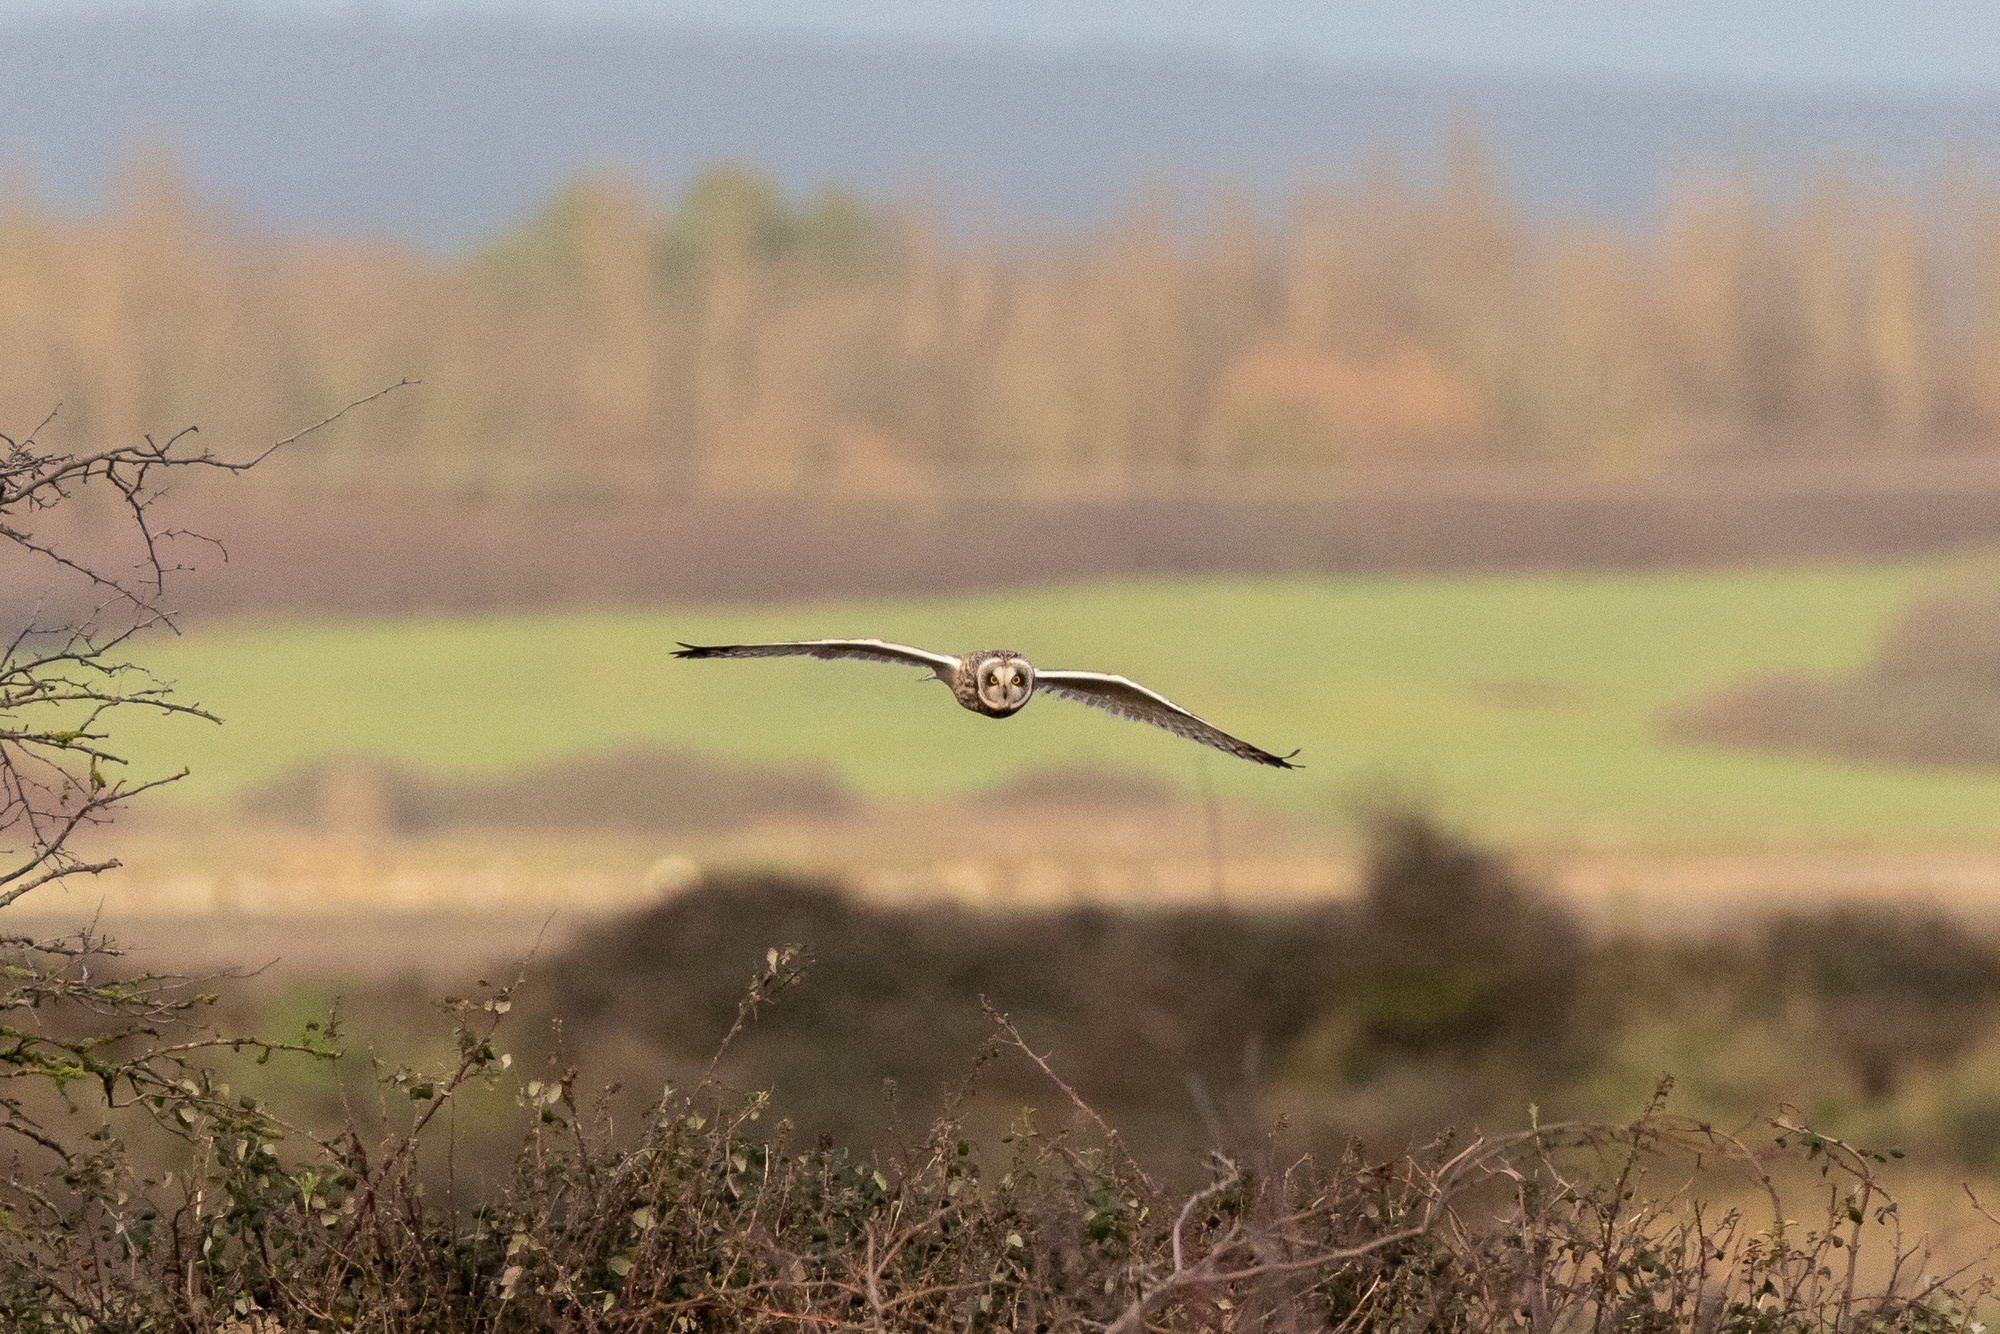 Short-eared owl flying towards camera above bramble